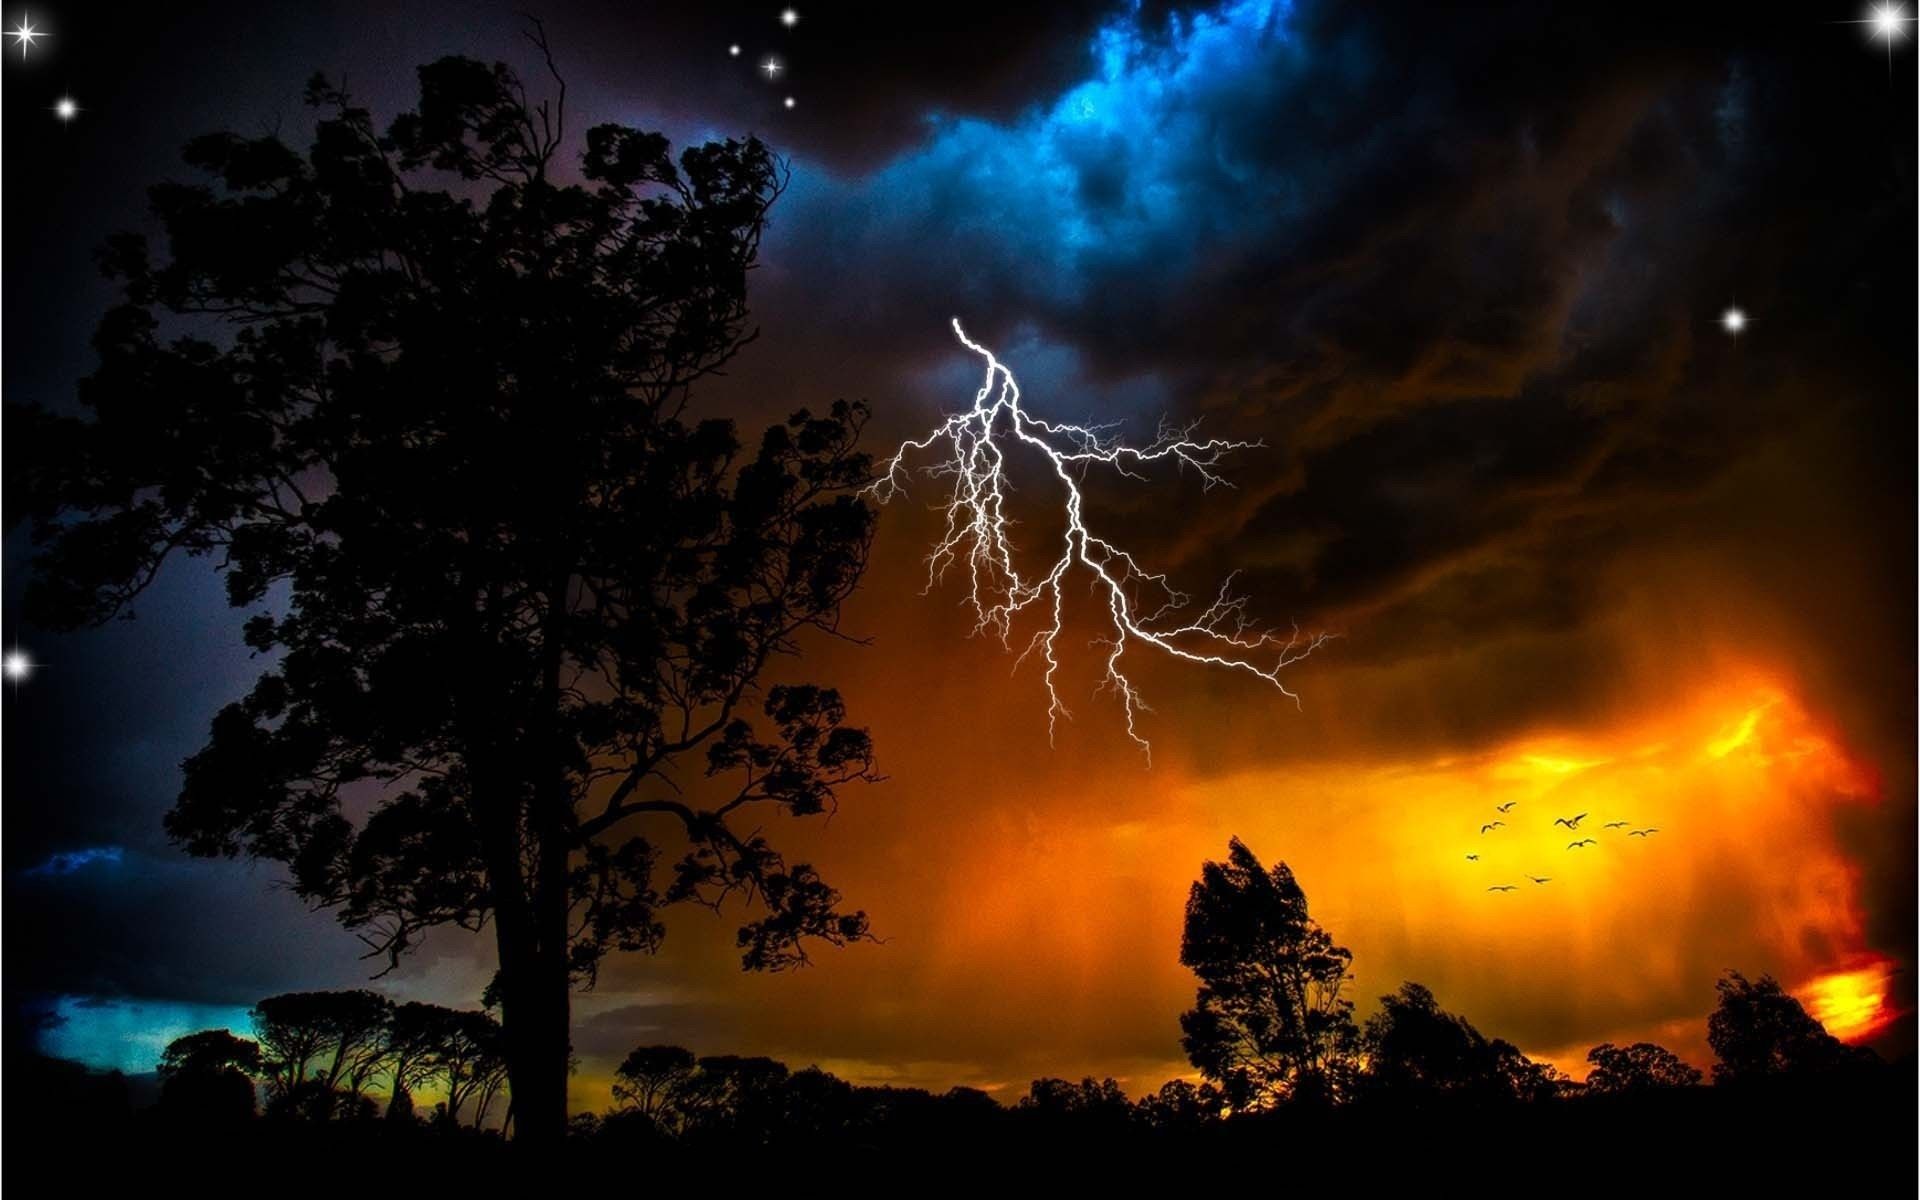 A lightning bolt in the sky during a storm. - Lightning